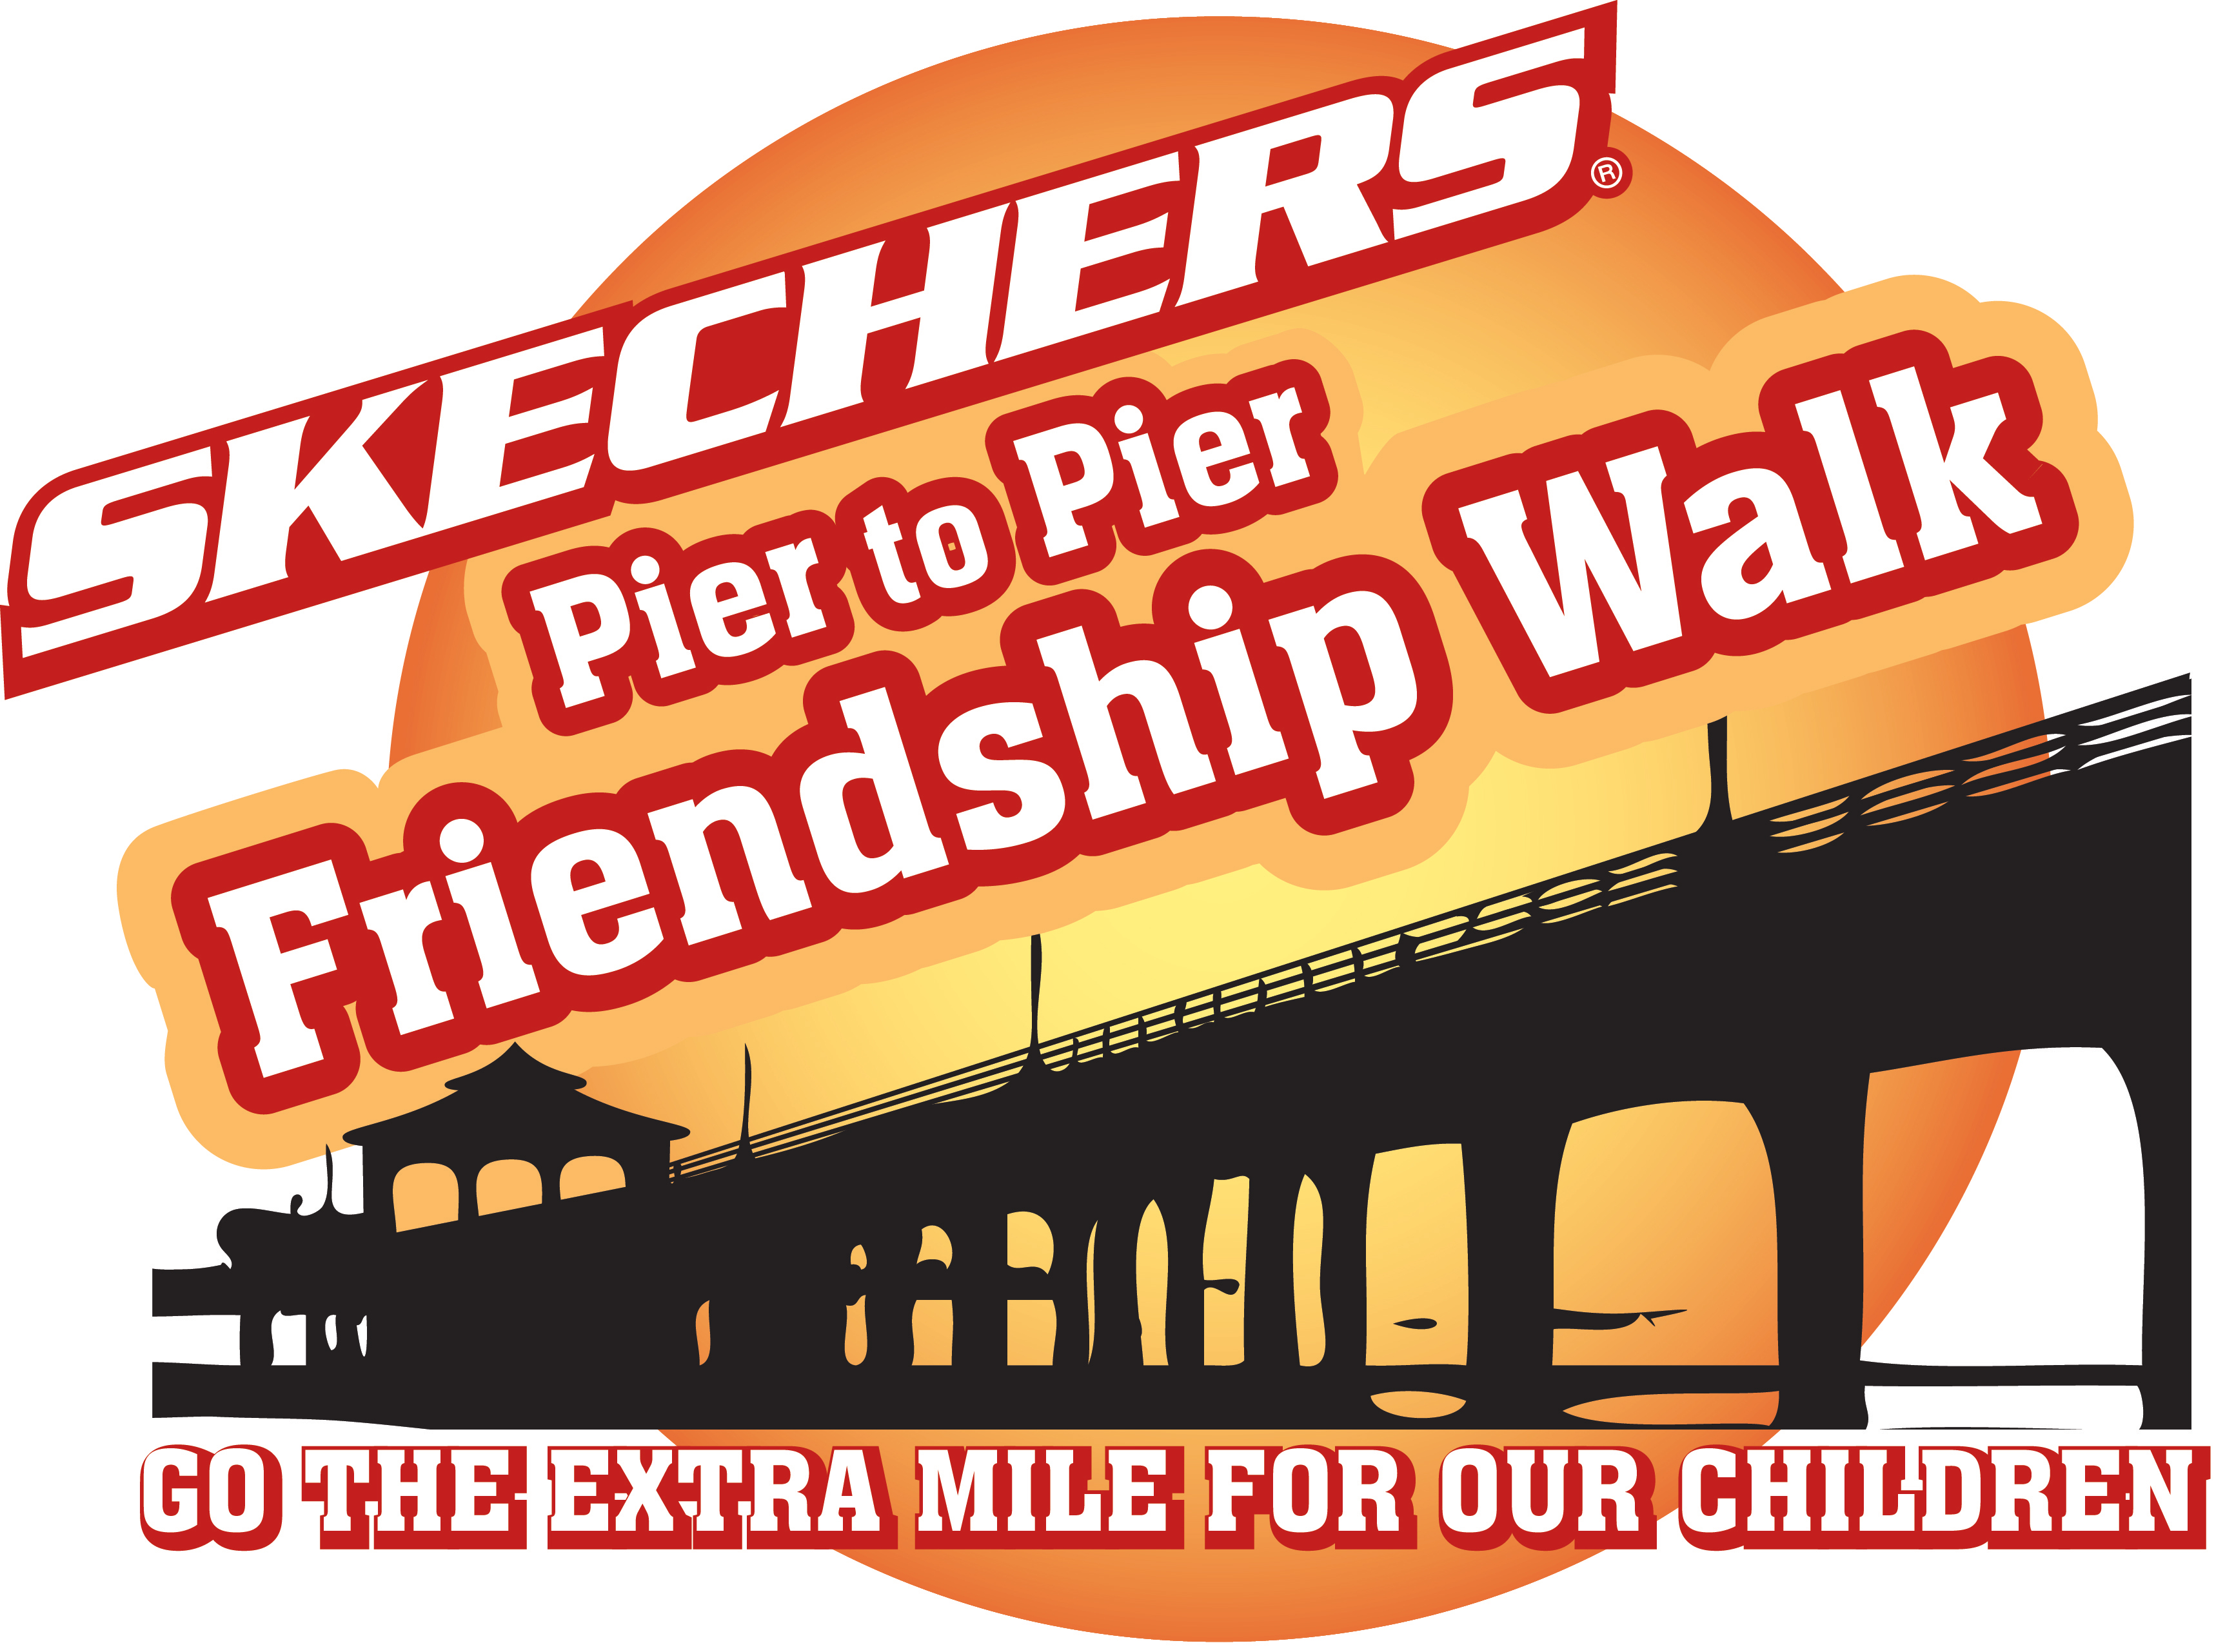 Skechers Pier to Pier Friendship Walk 